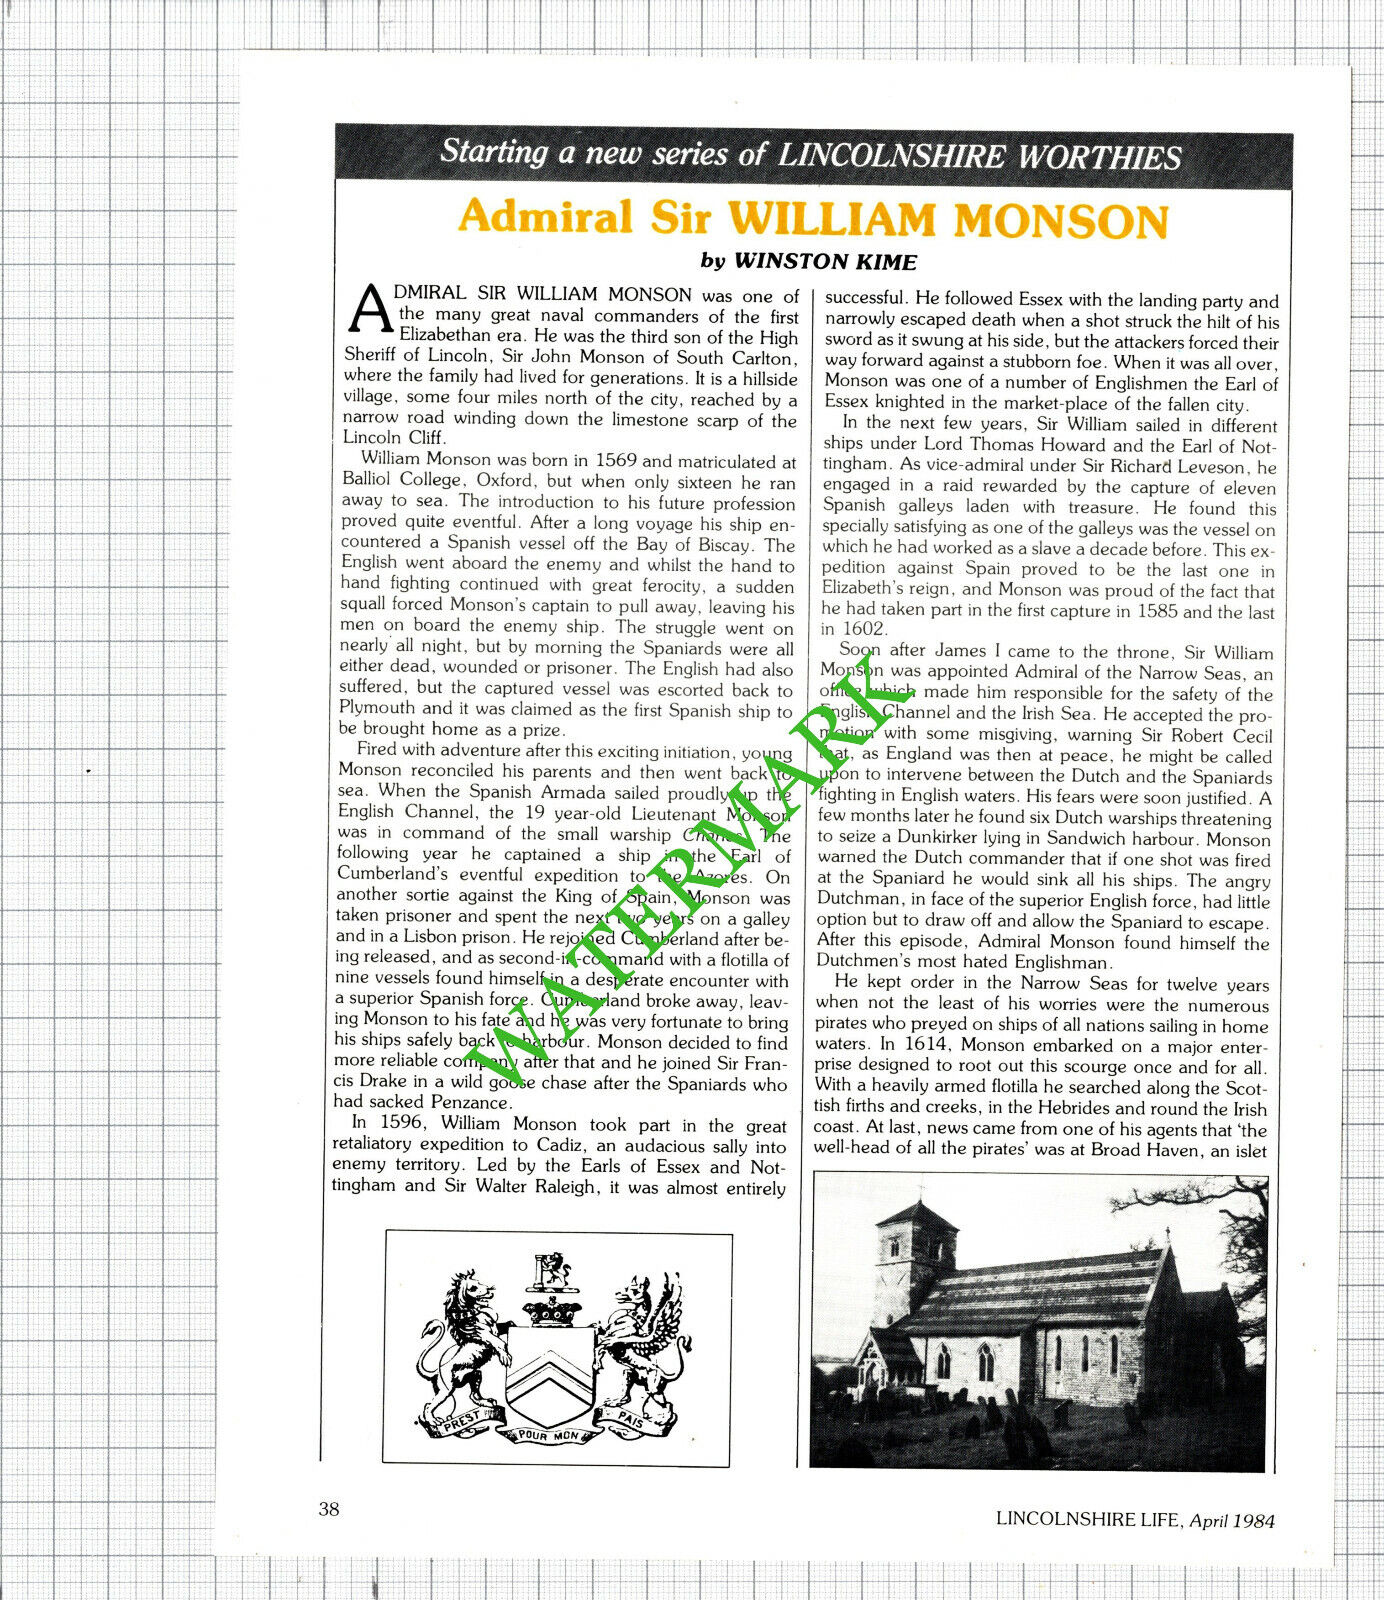 Admiral Sir William Monson - 1988 Article